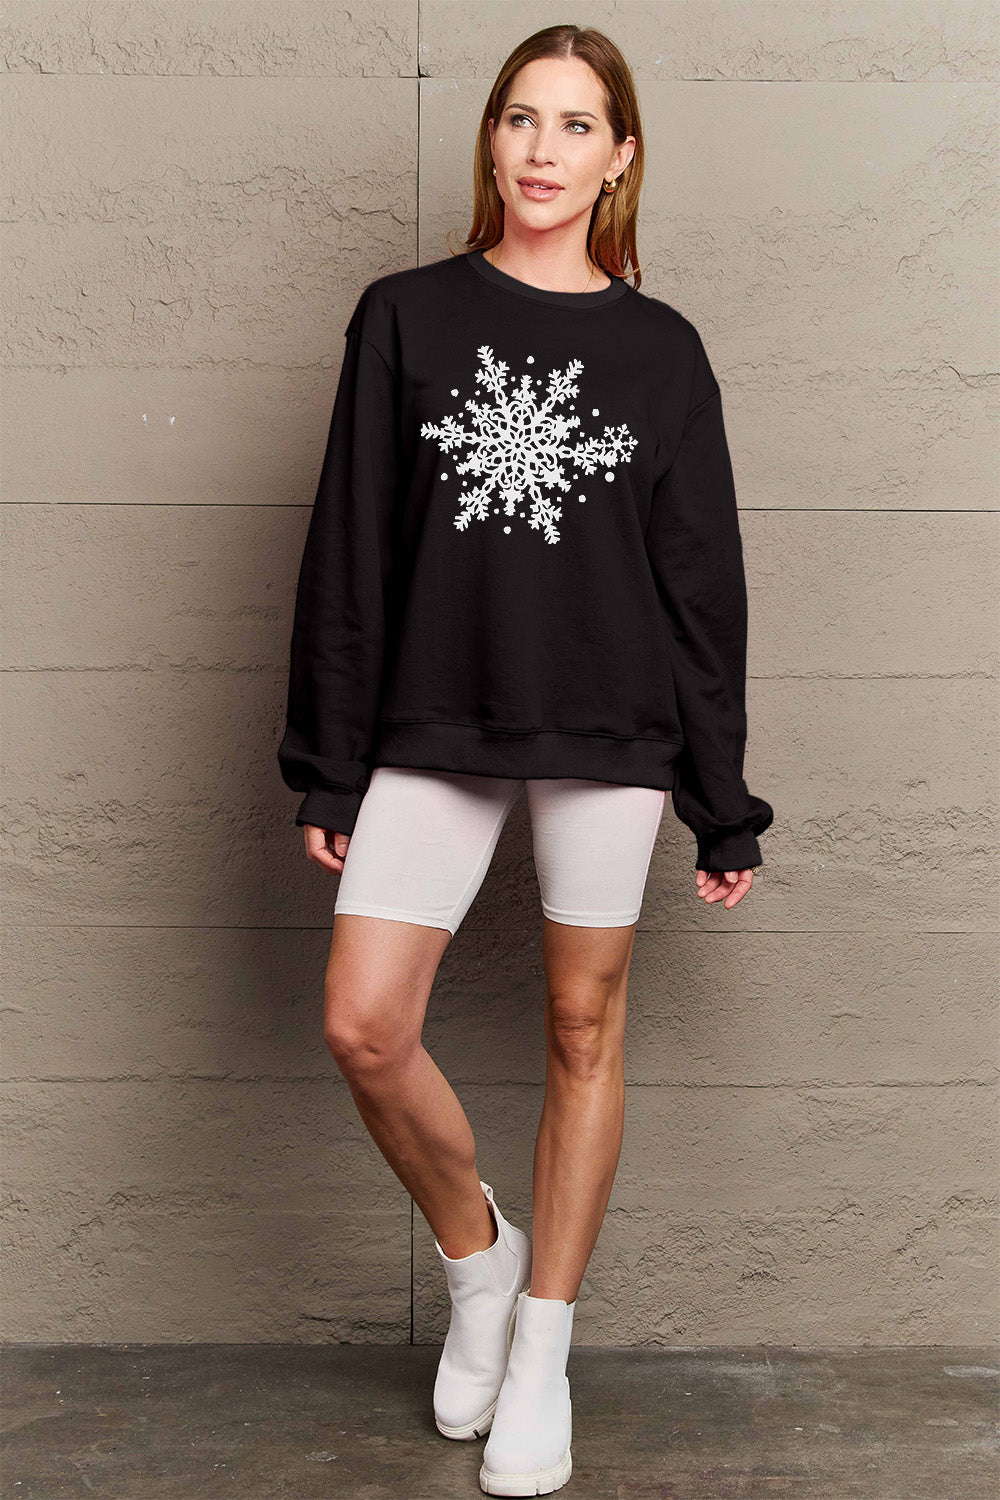 Snowflake Graphic Sweatshirt - 5 colors